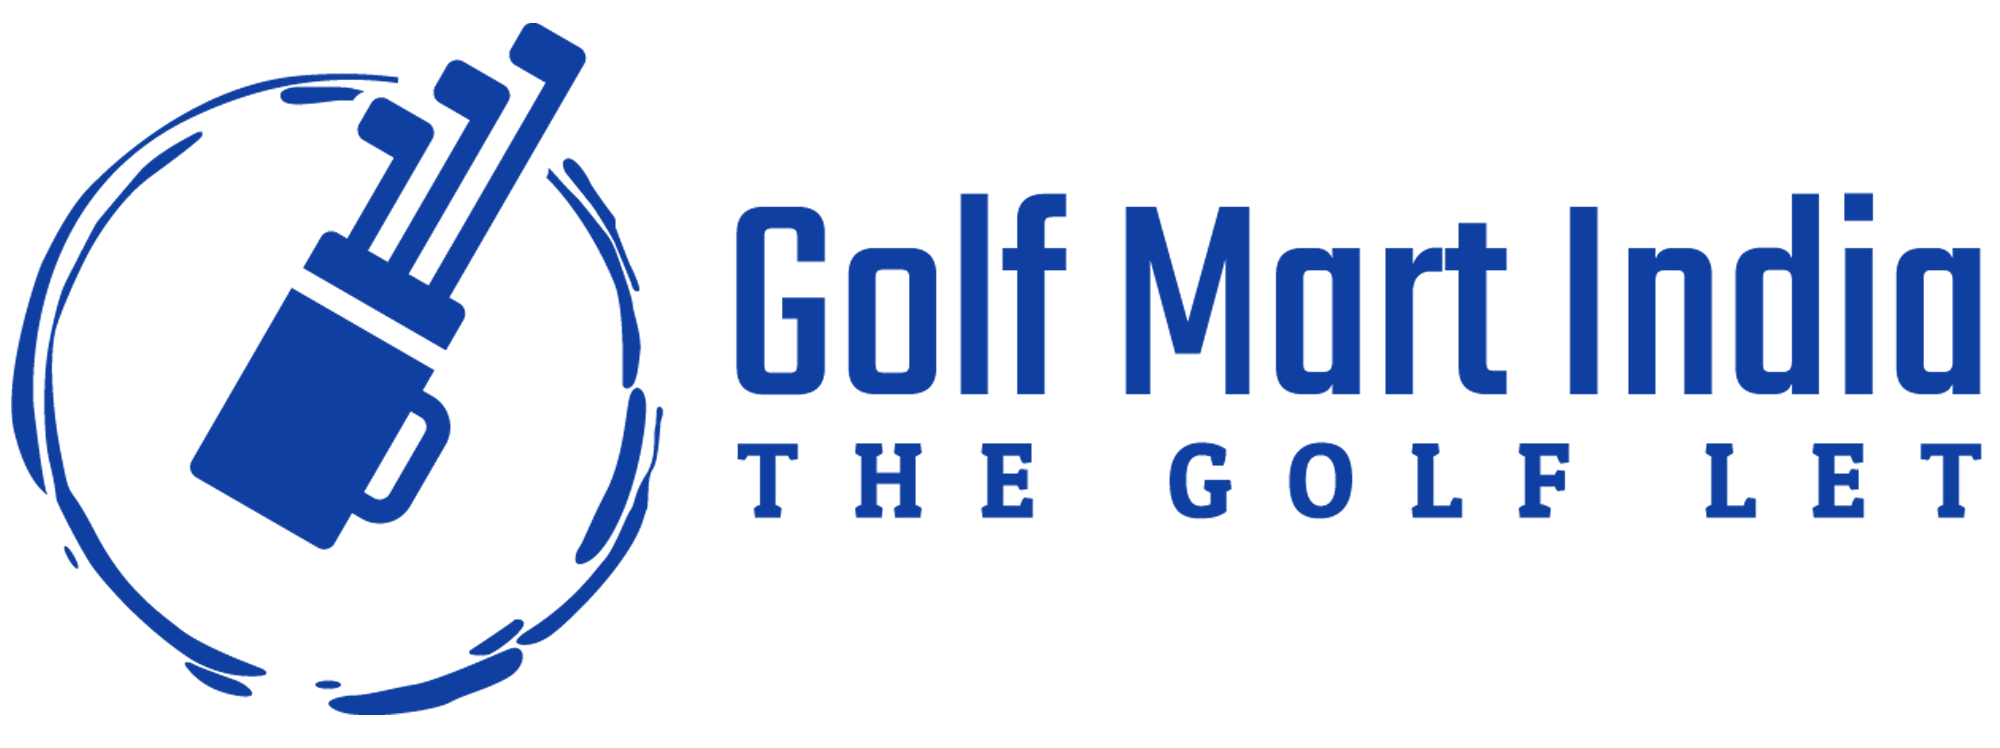 Golf Mart India